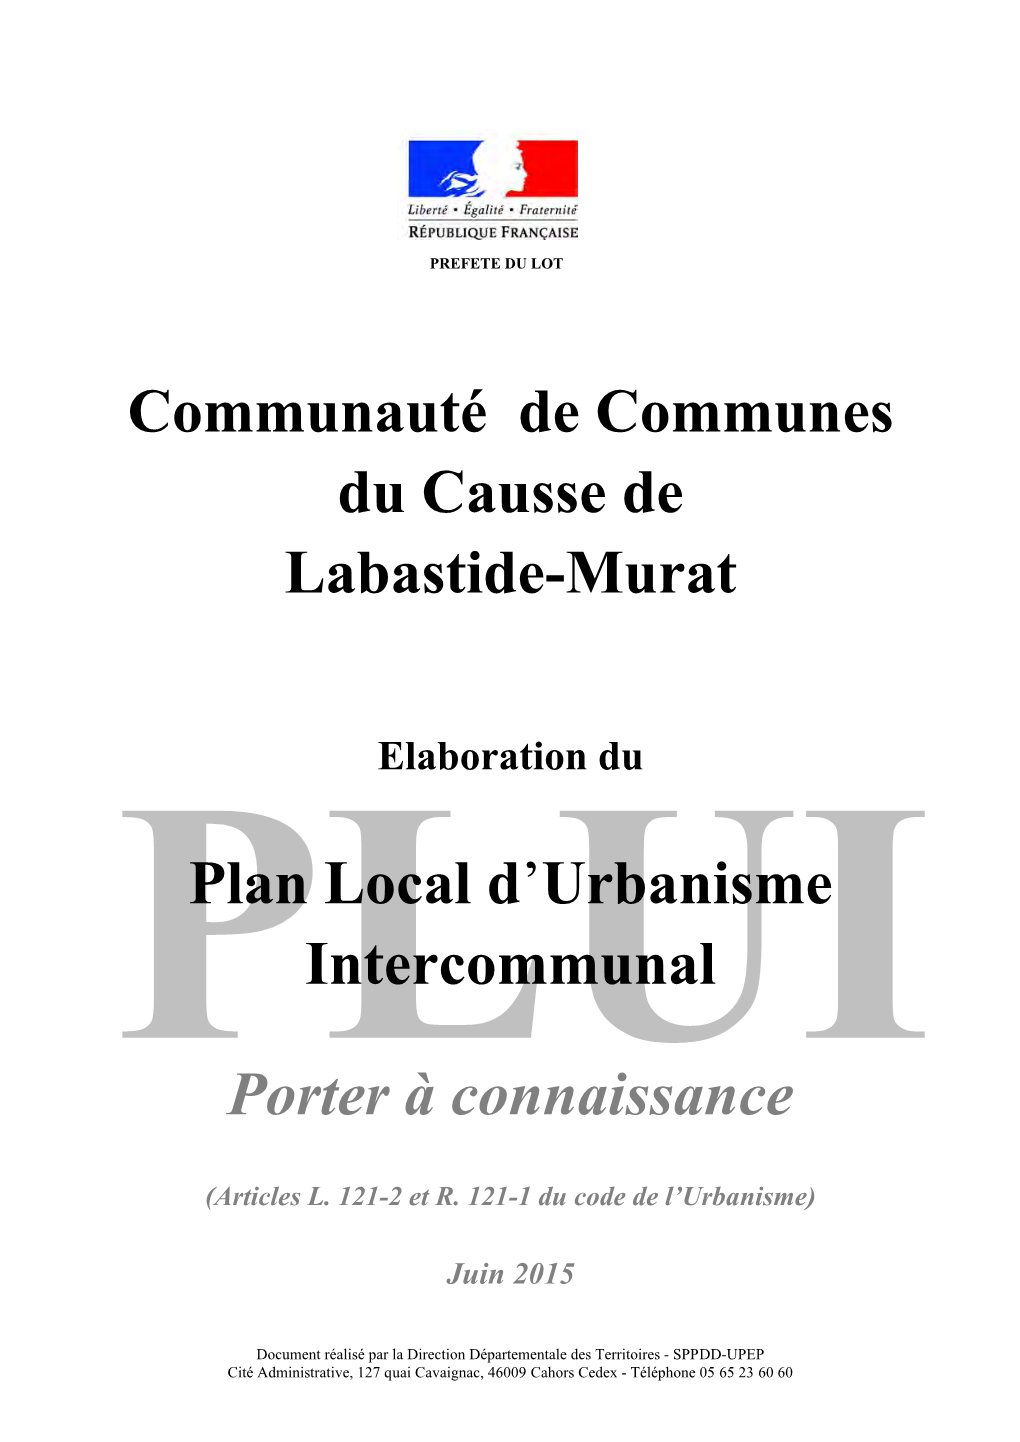 Communauté De Communes Du Causse De Labastide-Murat